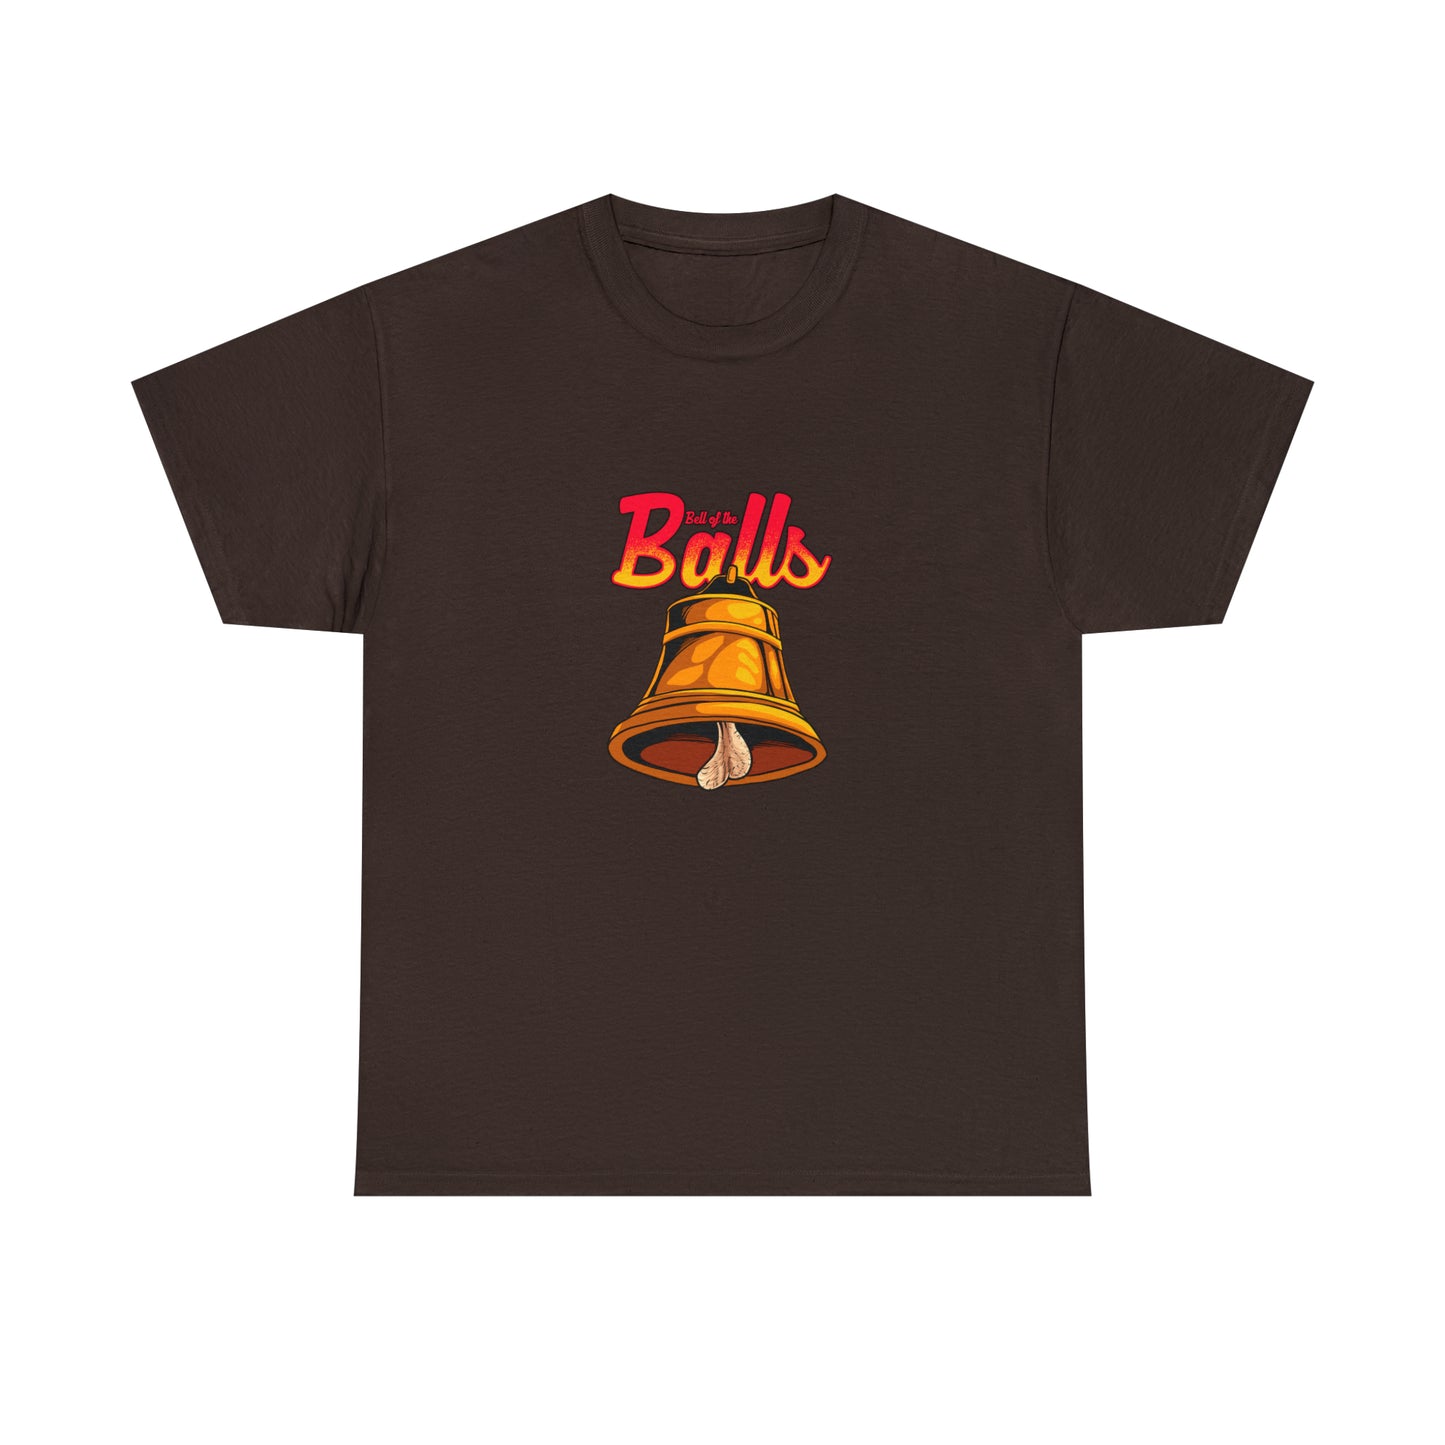 Custom Parody T-shirt, Bell of the Balls design